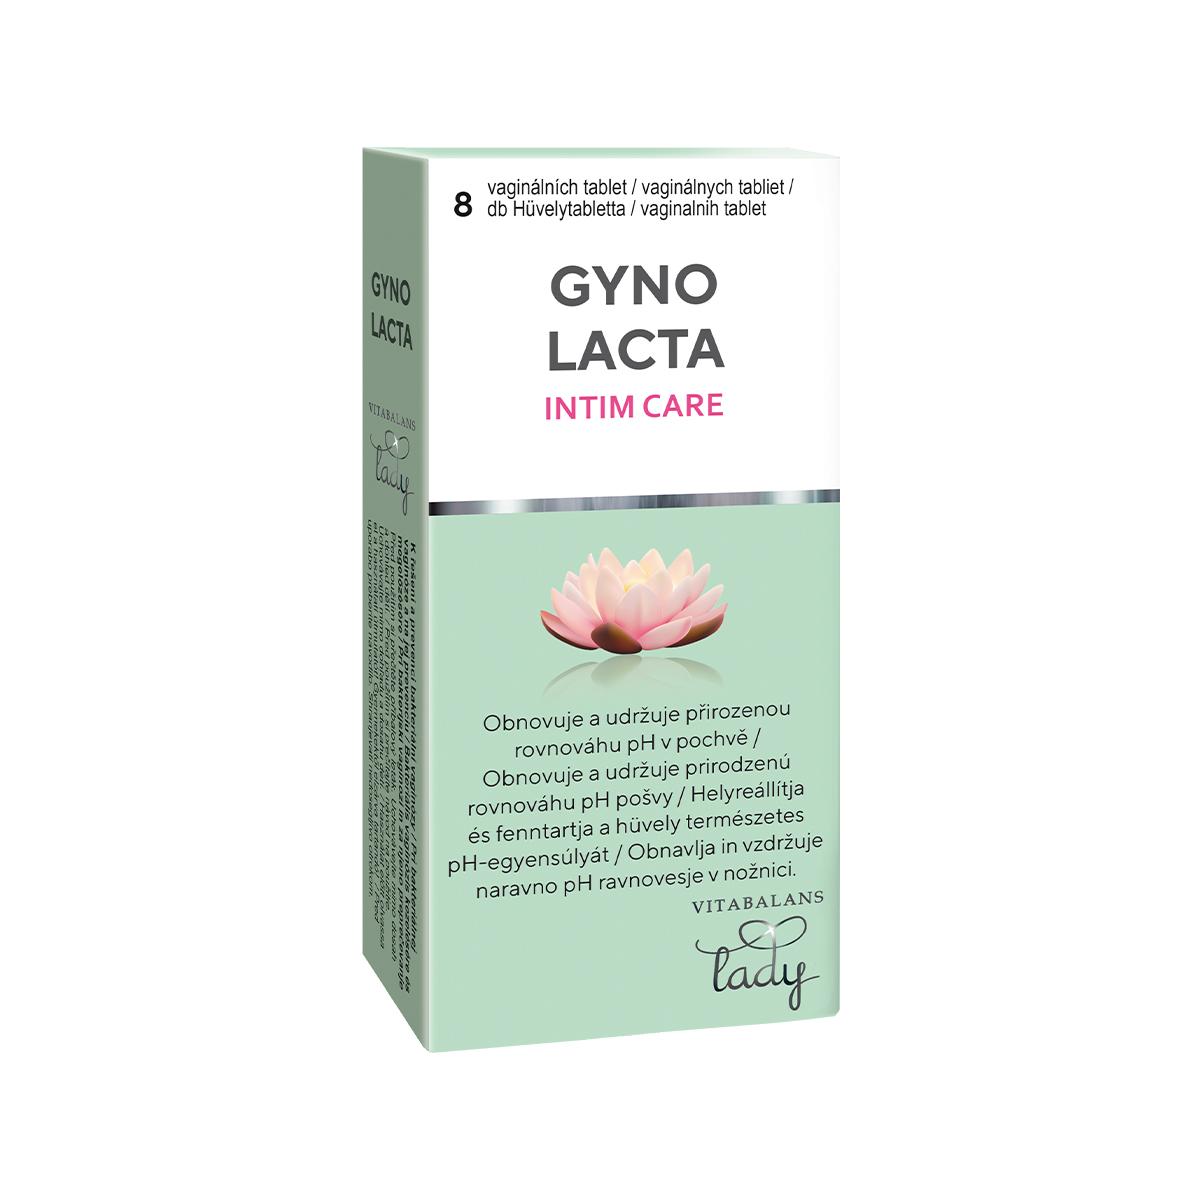 Vitabalans Lady Gynolacta, 8 vaginalnih tablet